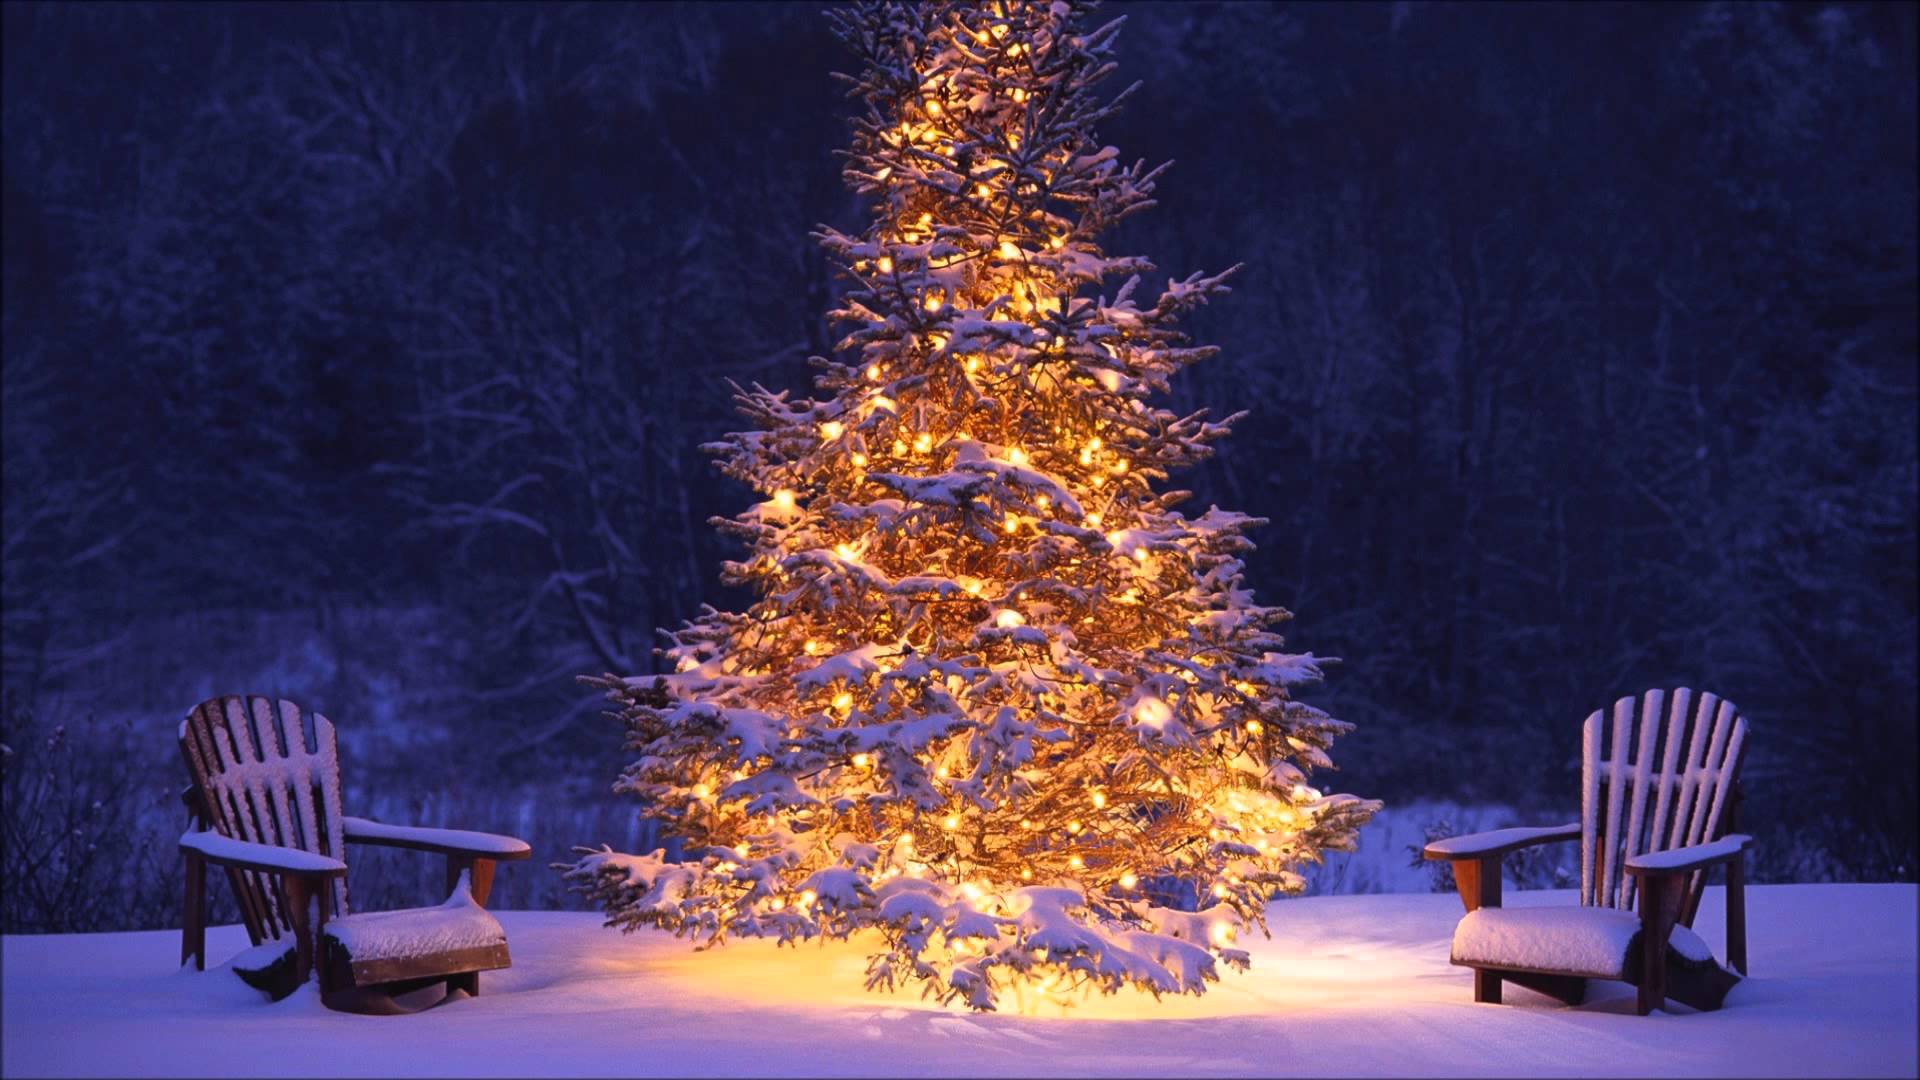 Photos of the Christmas tree